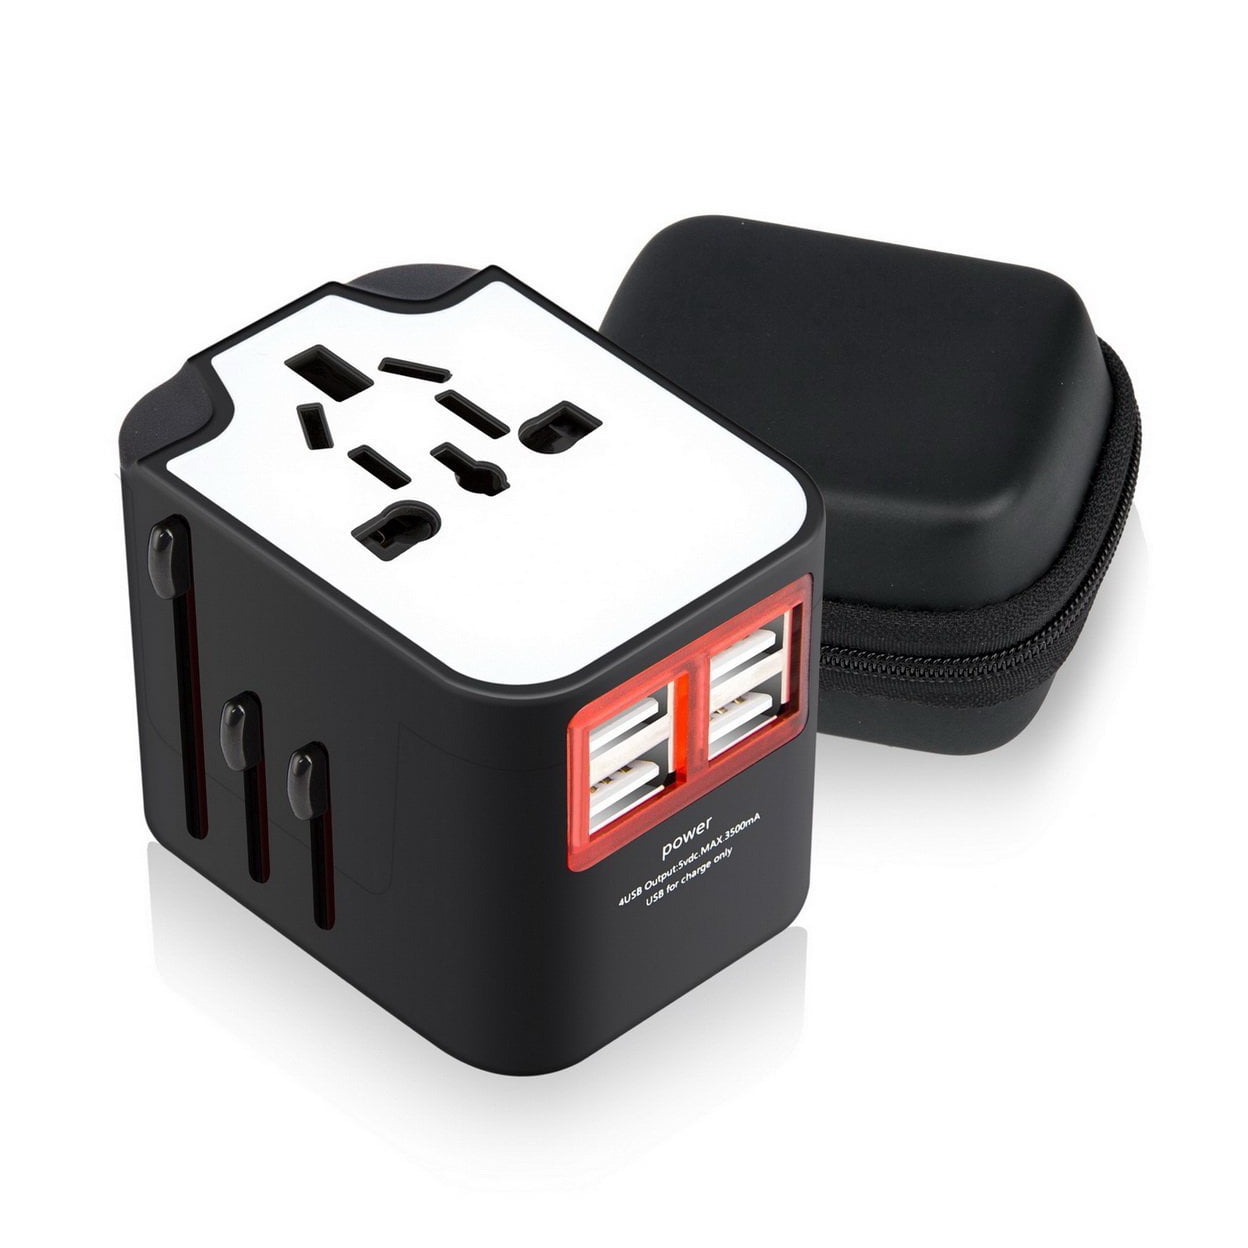 Belkin Travel Rockstar USB & Dual Outlet Surge Protector 3000mAh Battery Pack 